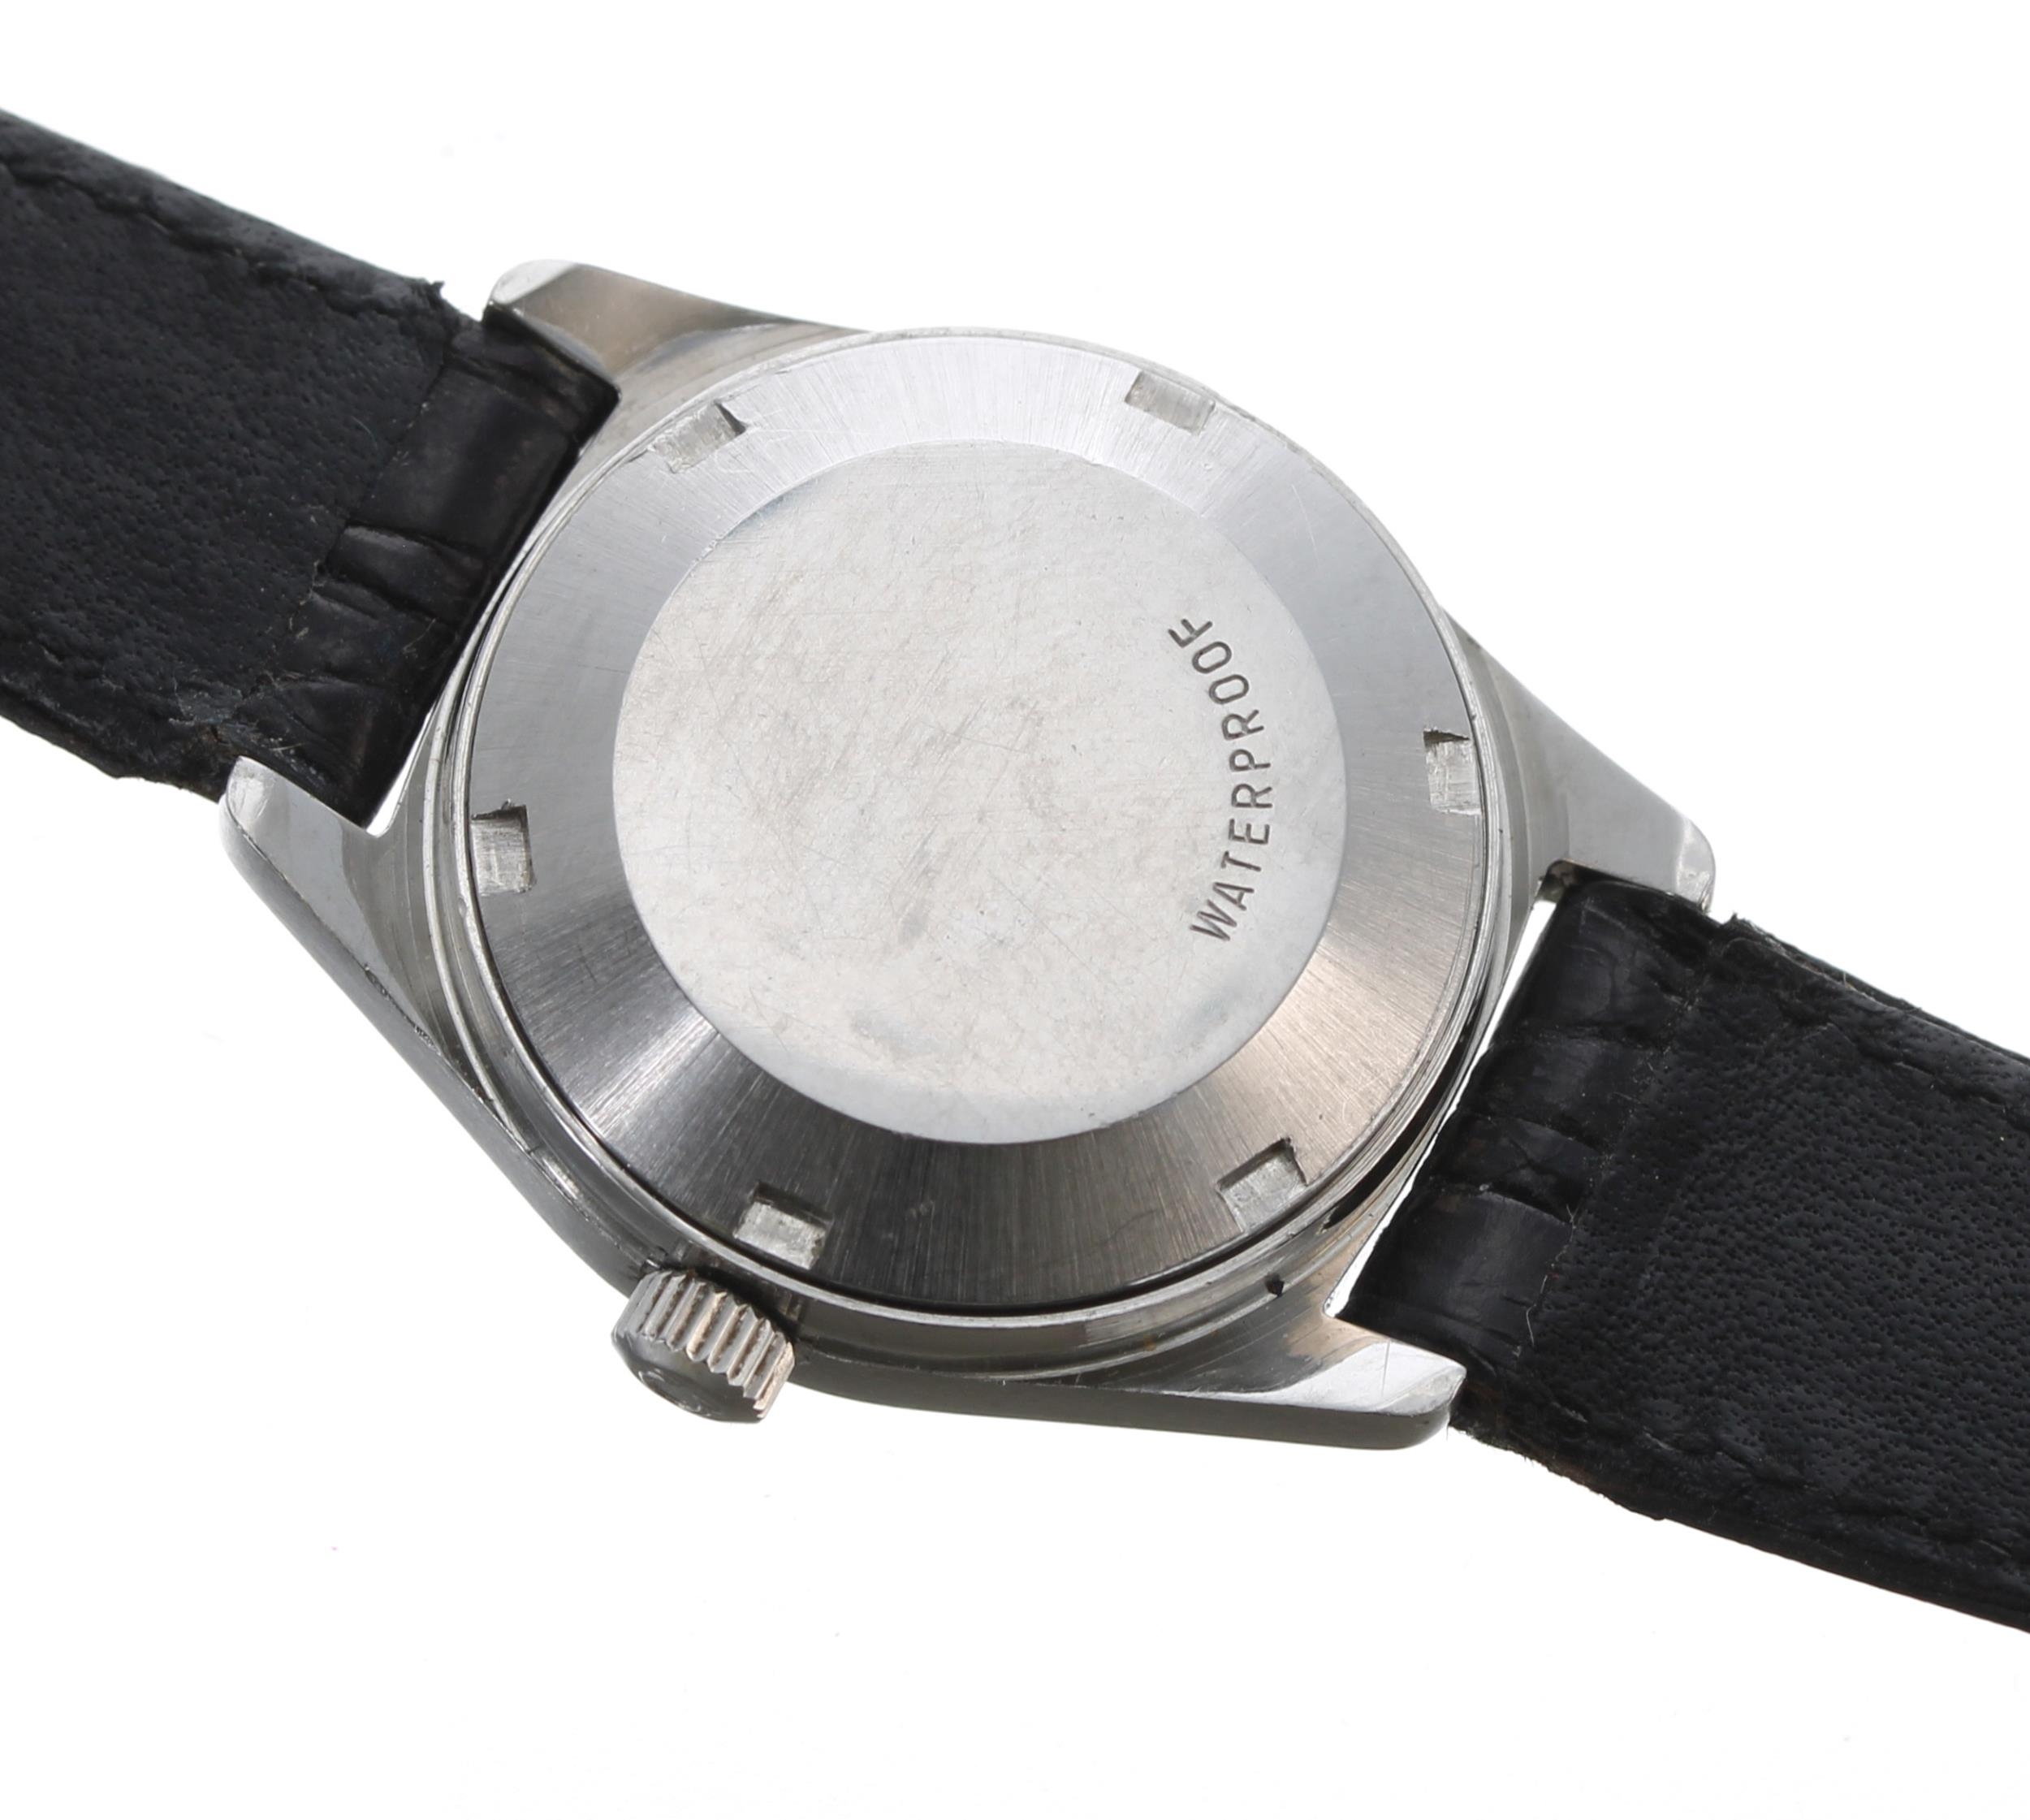 Omega Genéve automatic stainless steel lady's wristwatch, ref. 566.036, serial no. 38298xxx, circa - Image 2 of 3